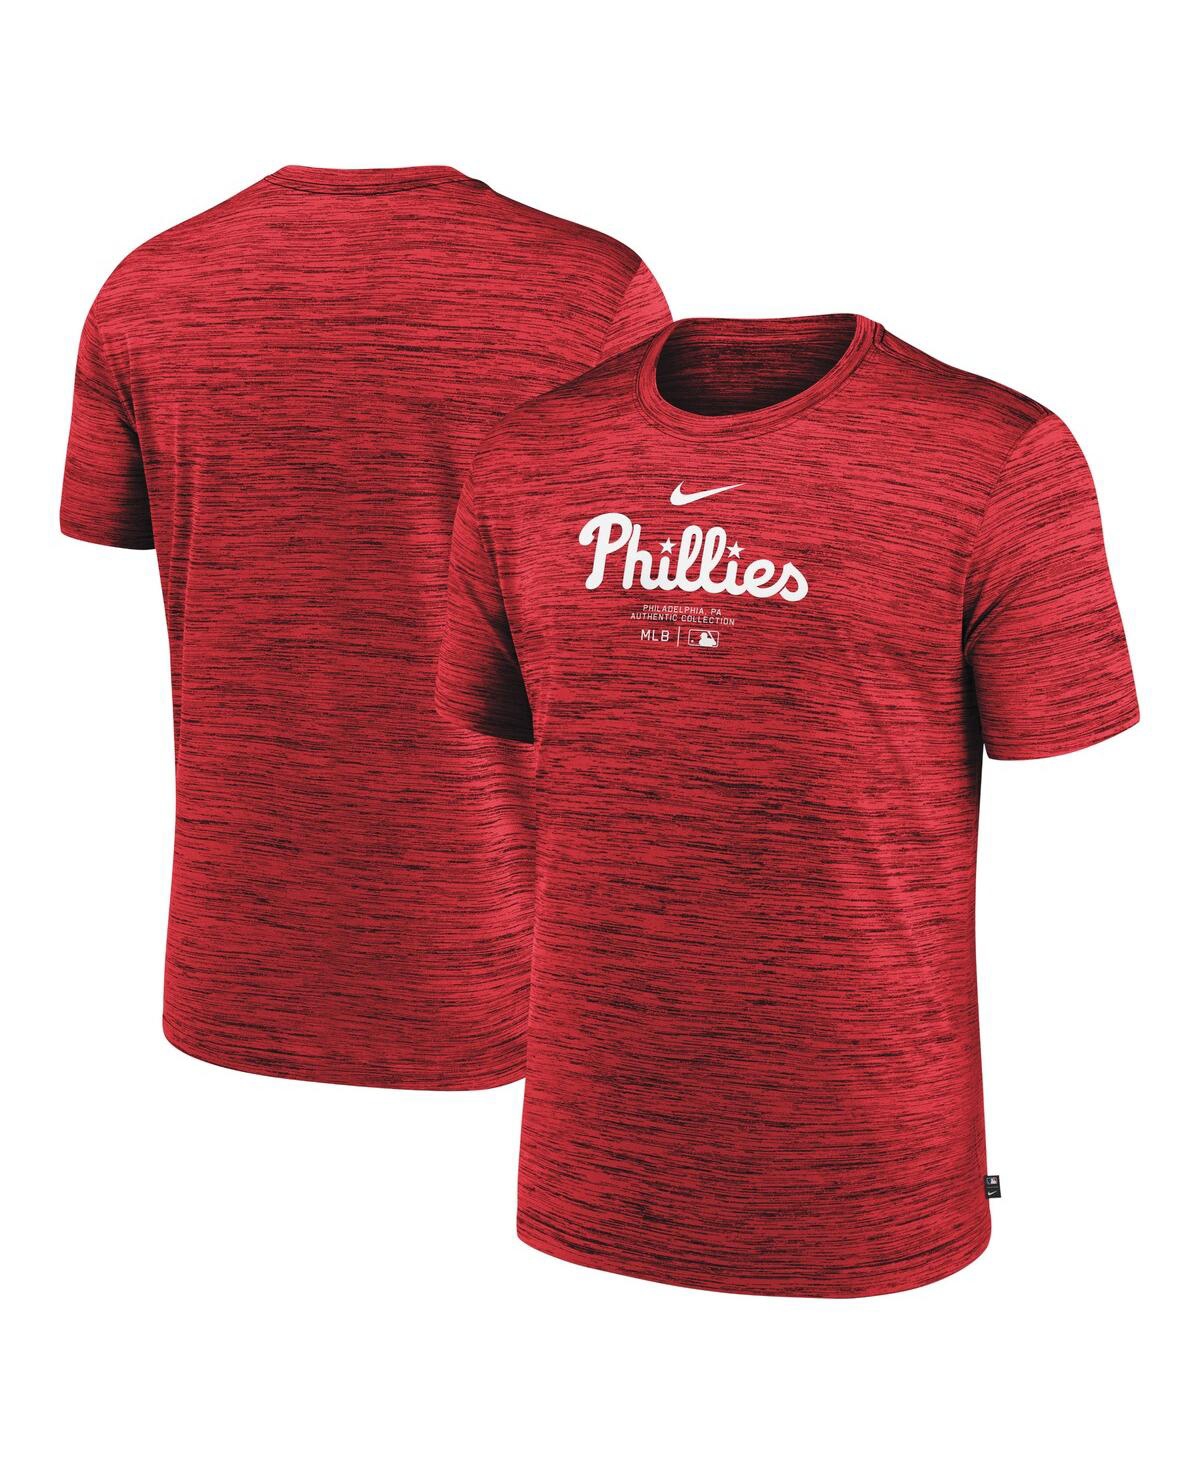 Shop Nike Men's Red Philadelphia Phillies Authentic Collection Velocity Performance Practice T-shirt